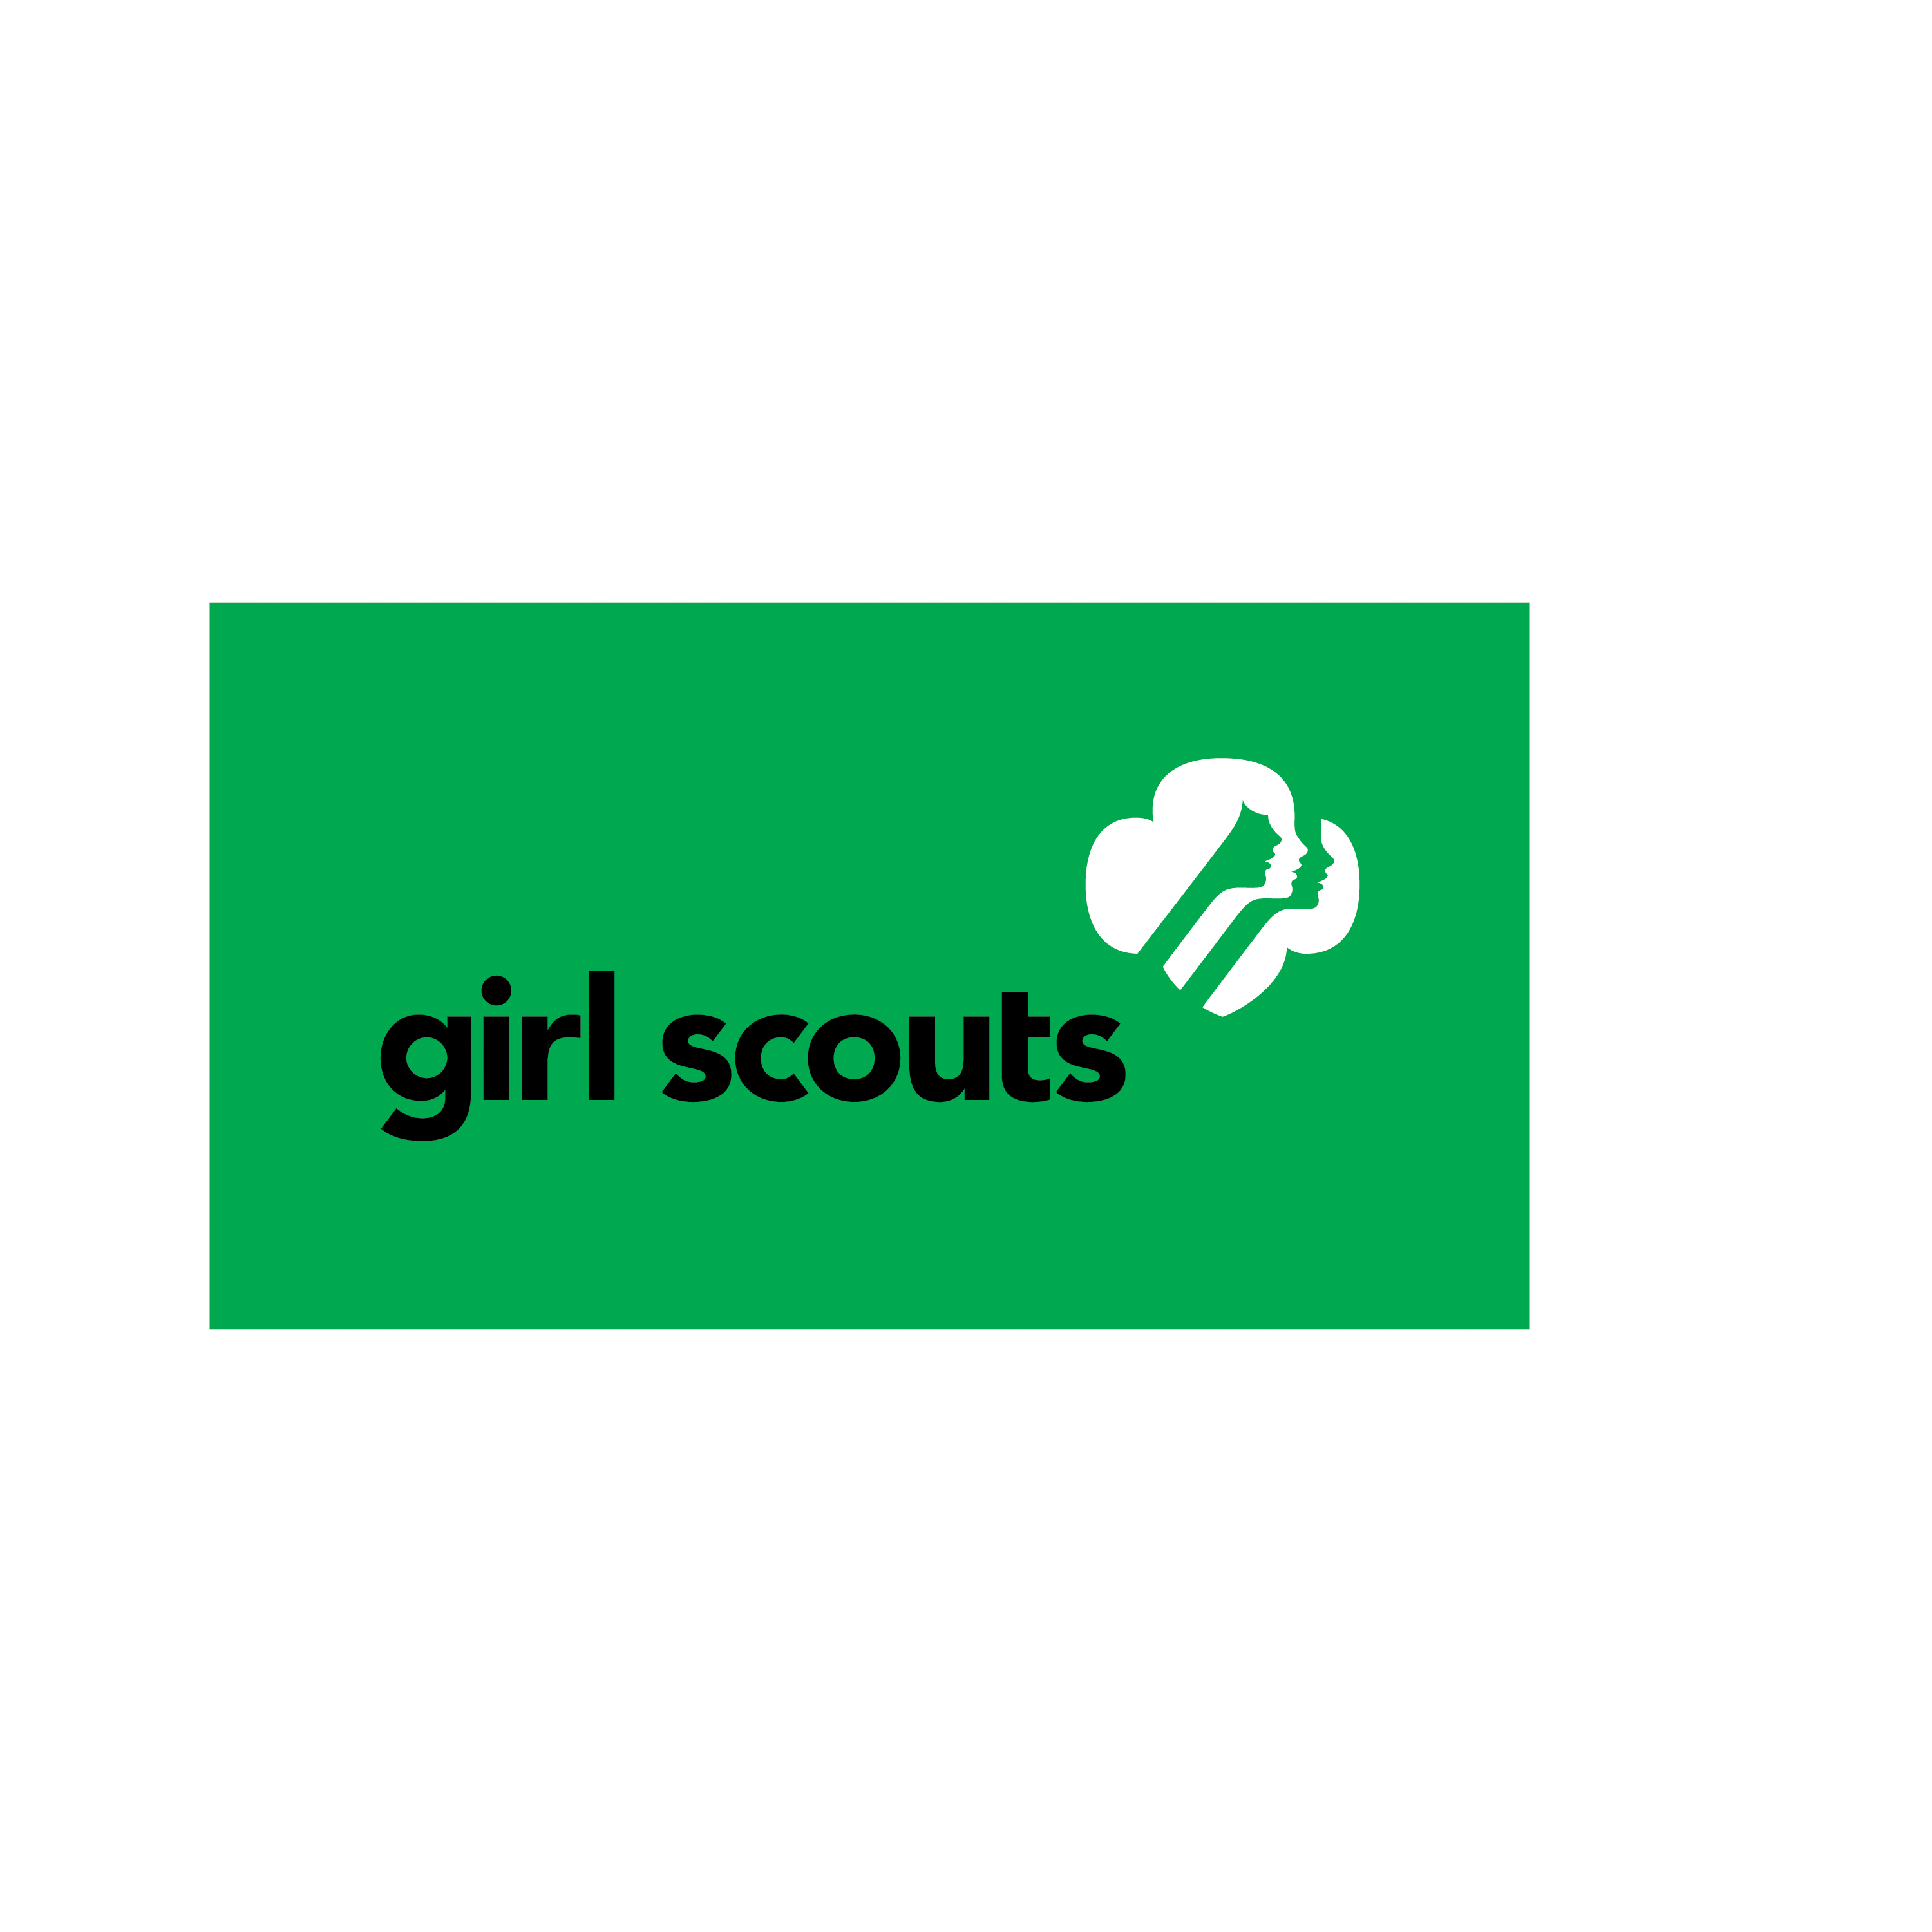 girl scout logo clip art free - photo #22